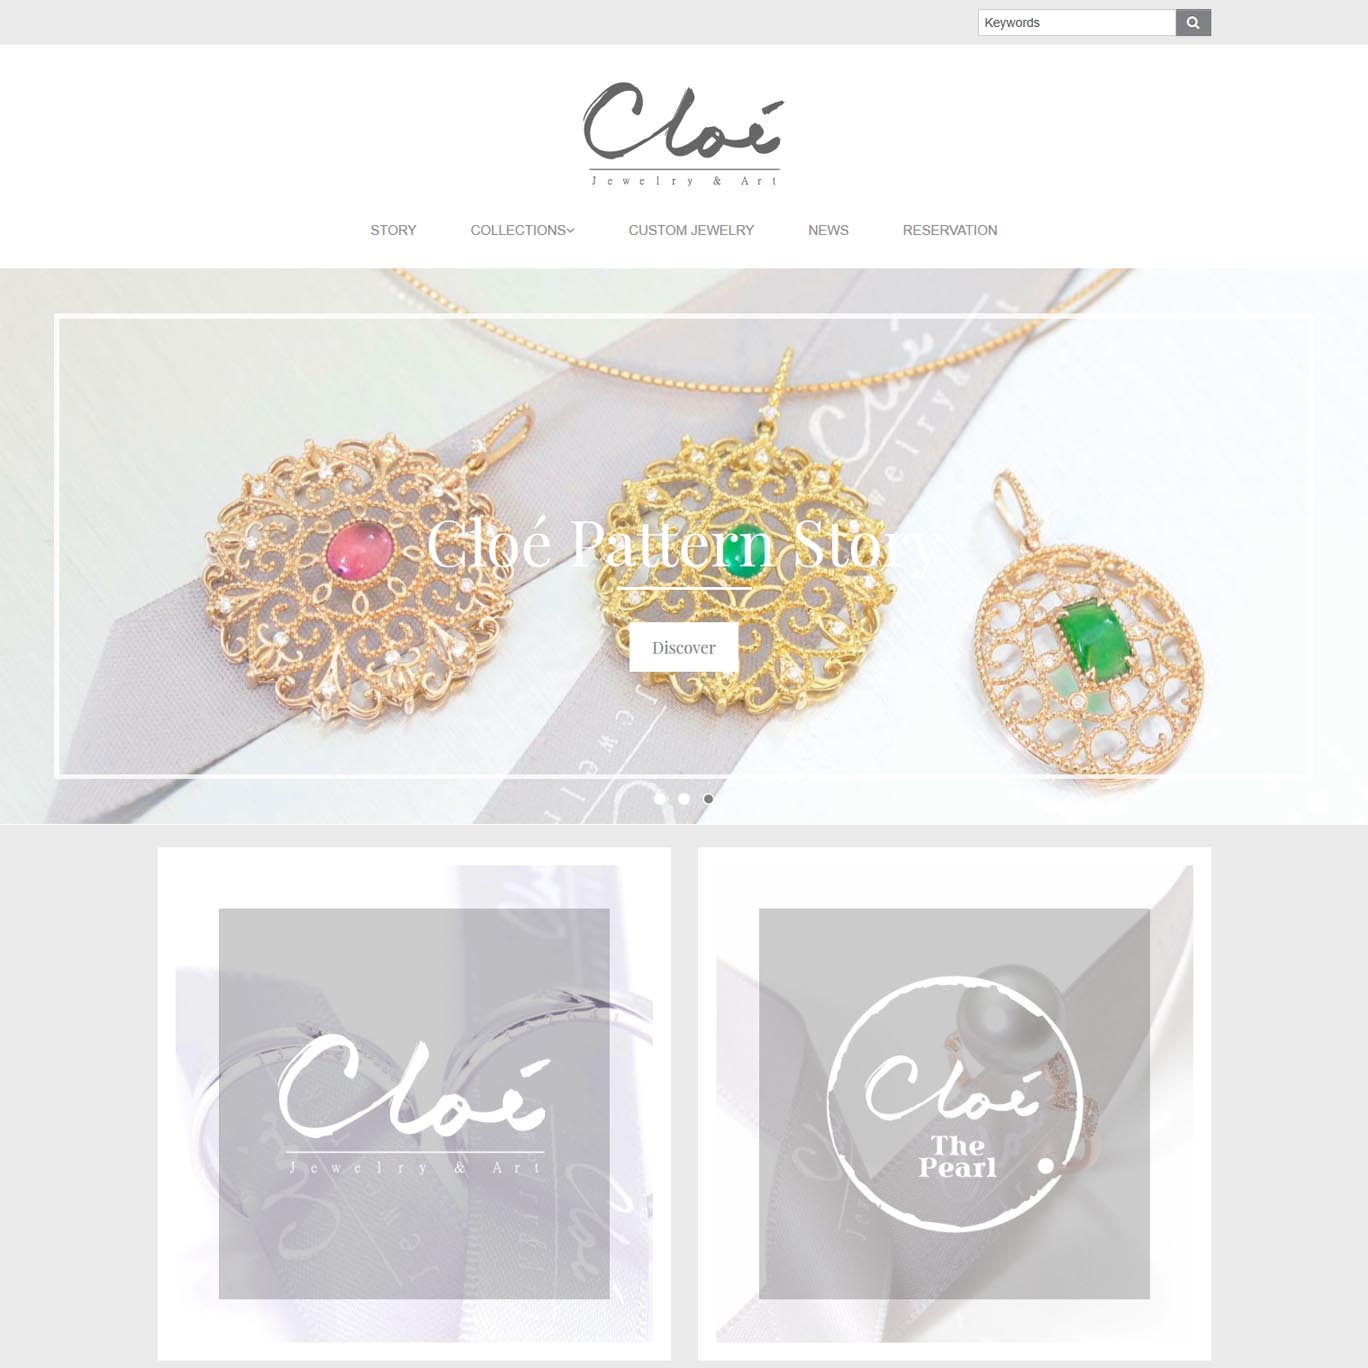 Cloé Jewelry & Art